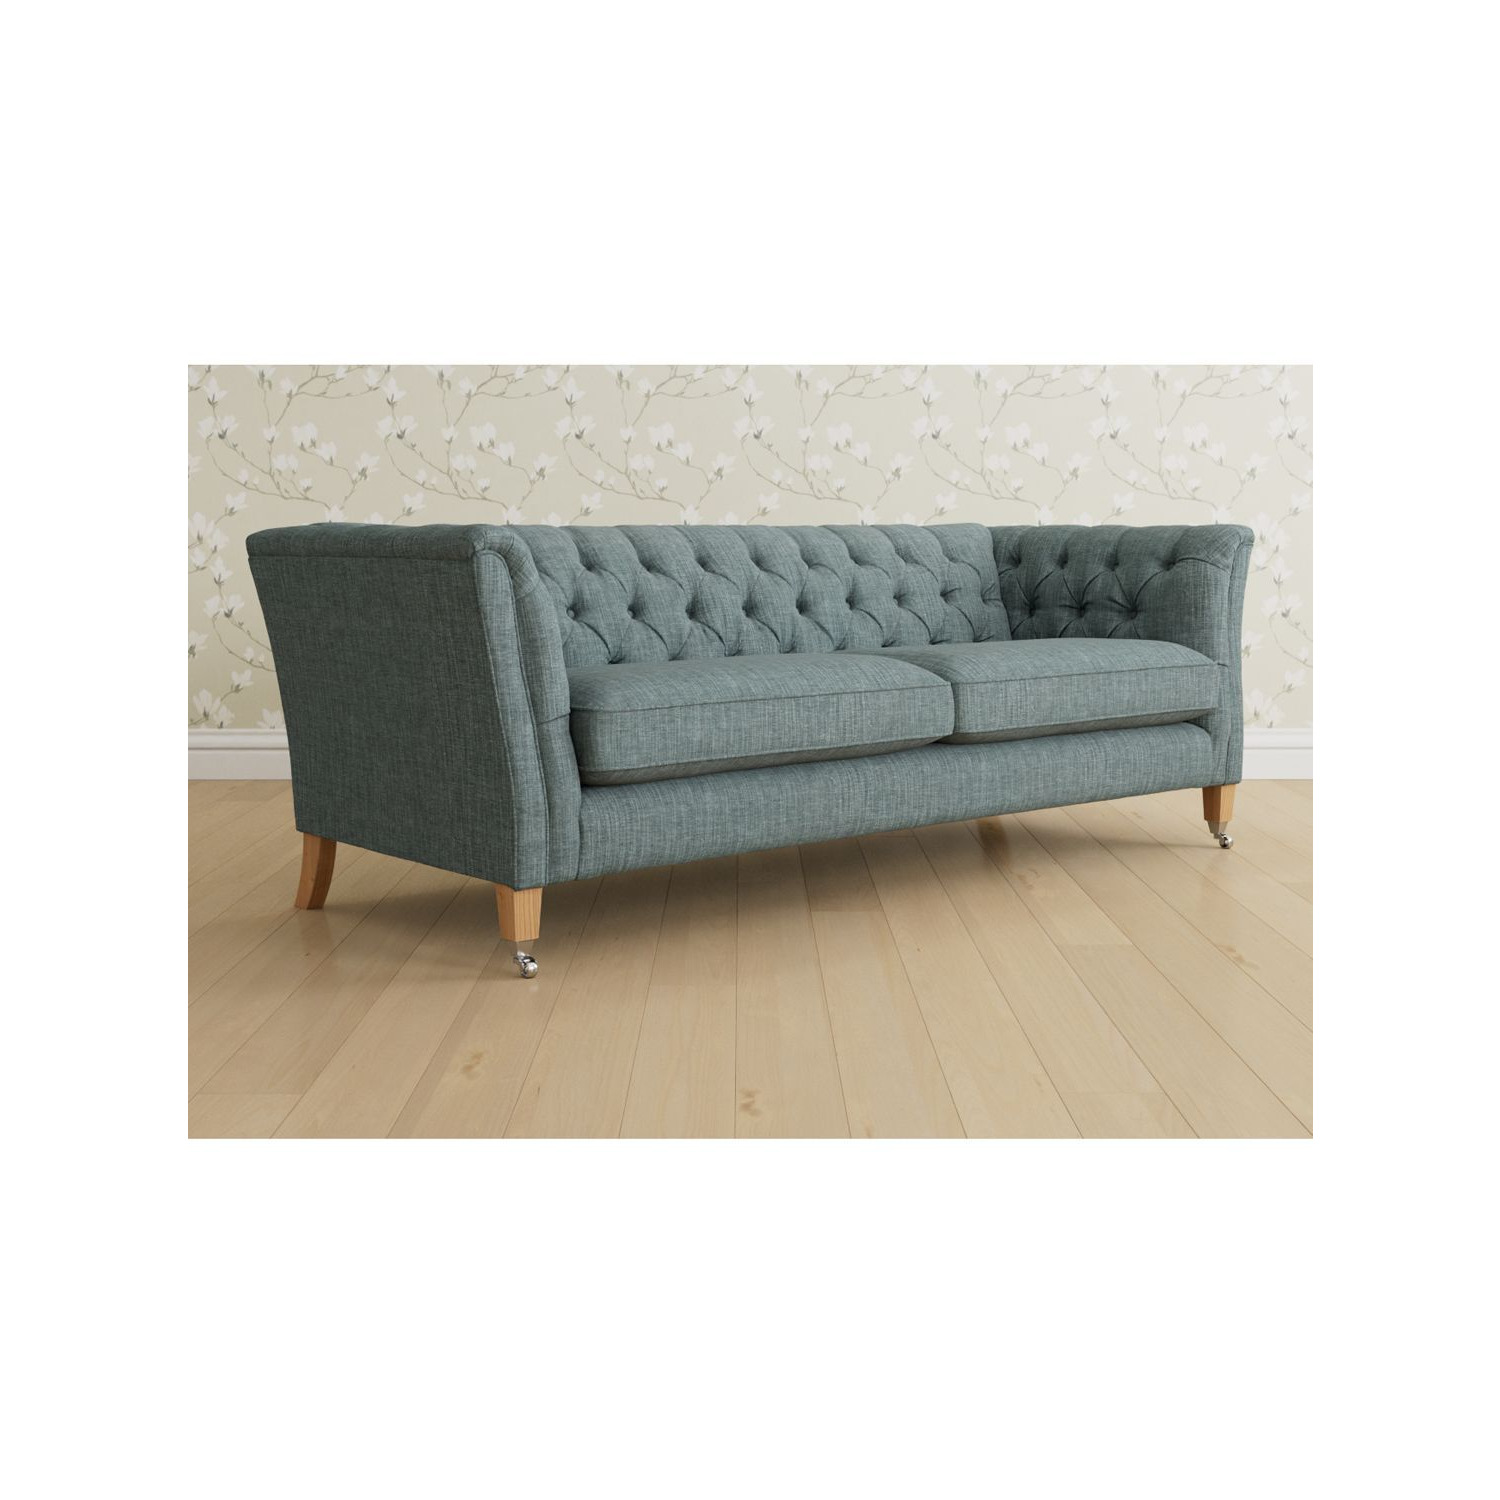 Laura Ashley Chatsworth Grand 4 Seater Sofa, Oak Leg - image 1